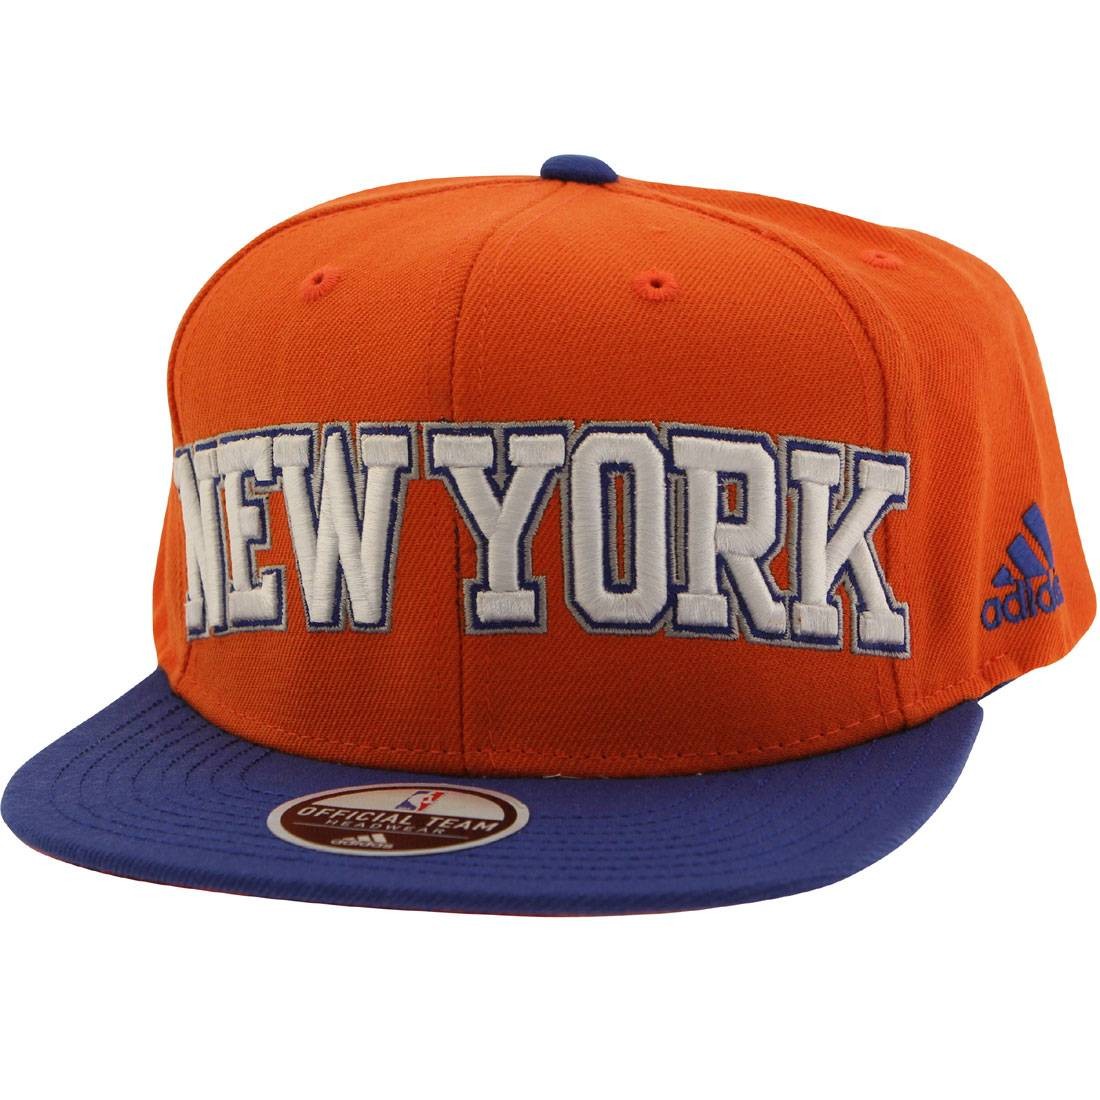 Adidas NBA New York Knicks On Court Snapback Cap orange blue